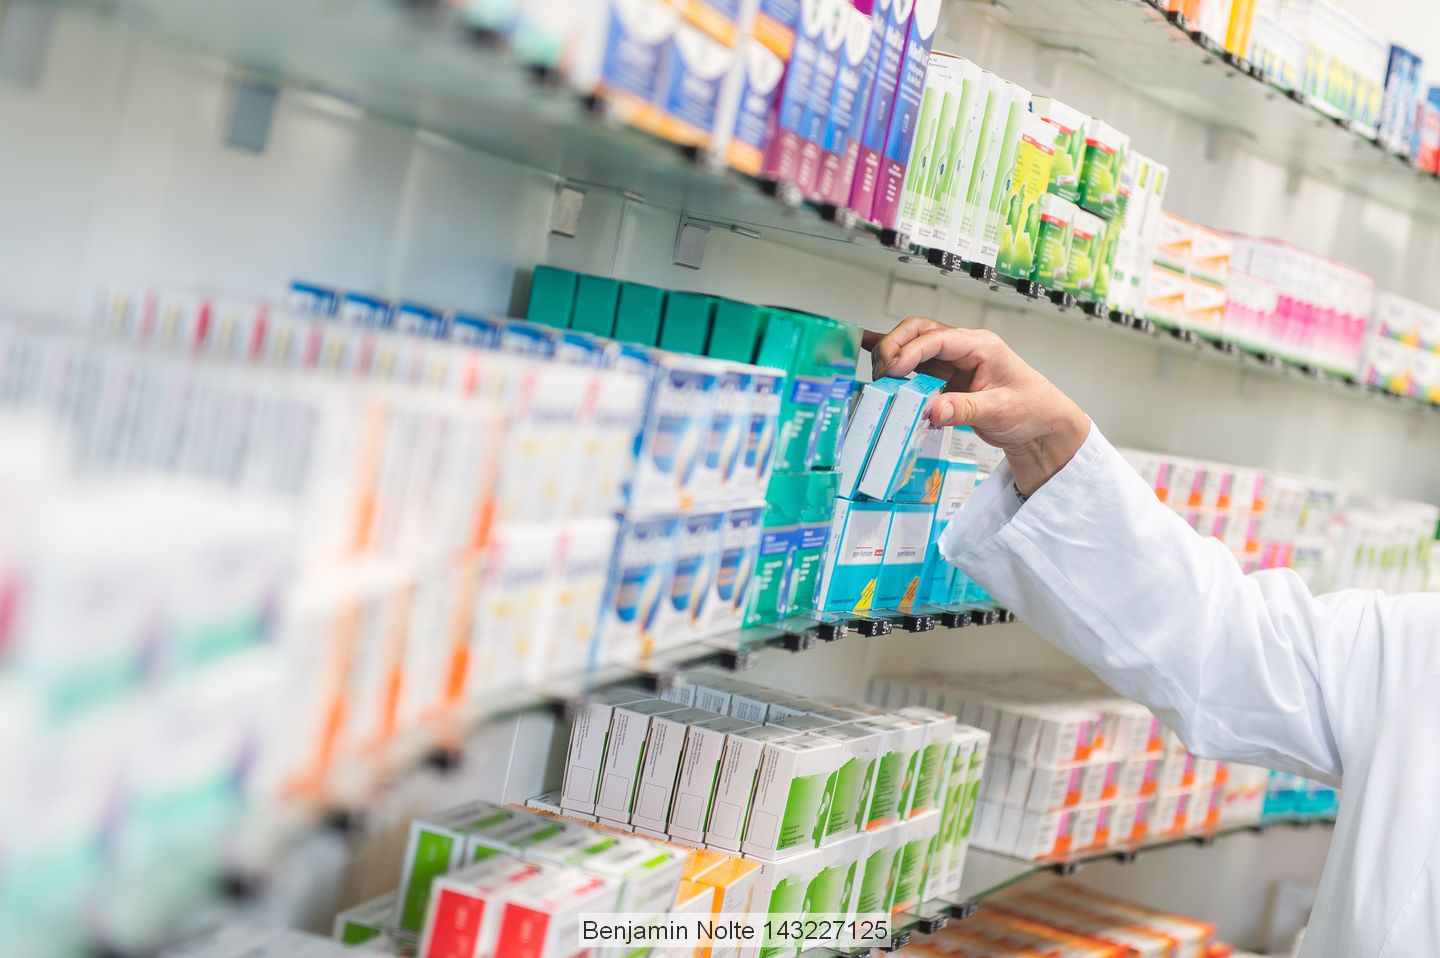 Mayr-Melnhof considers pharma packaging attractive platform for growth